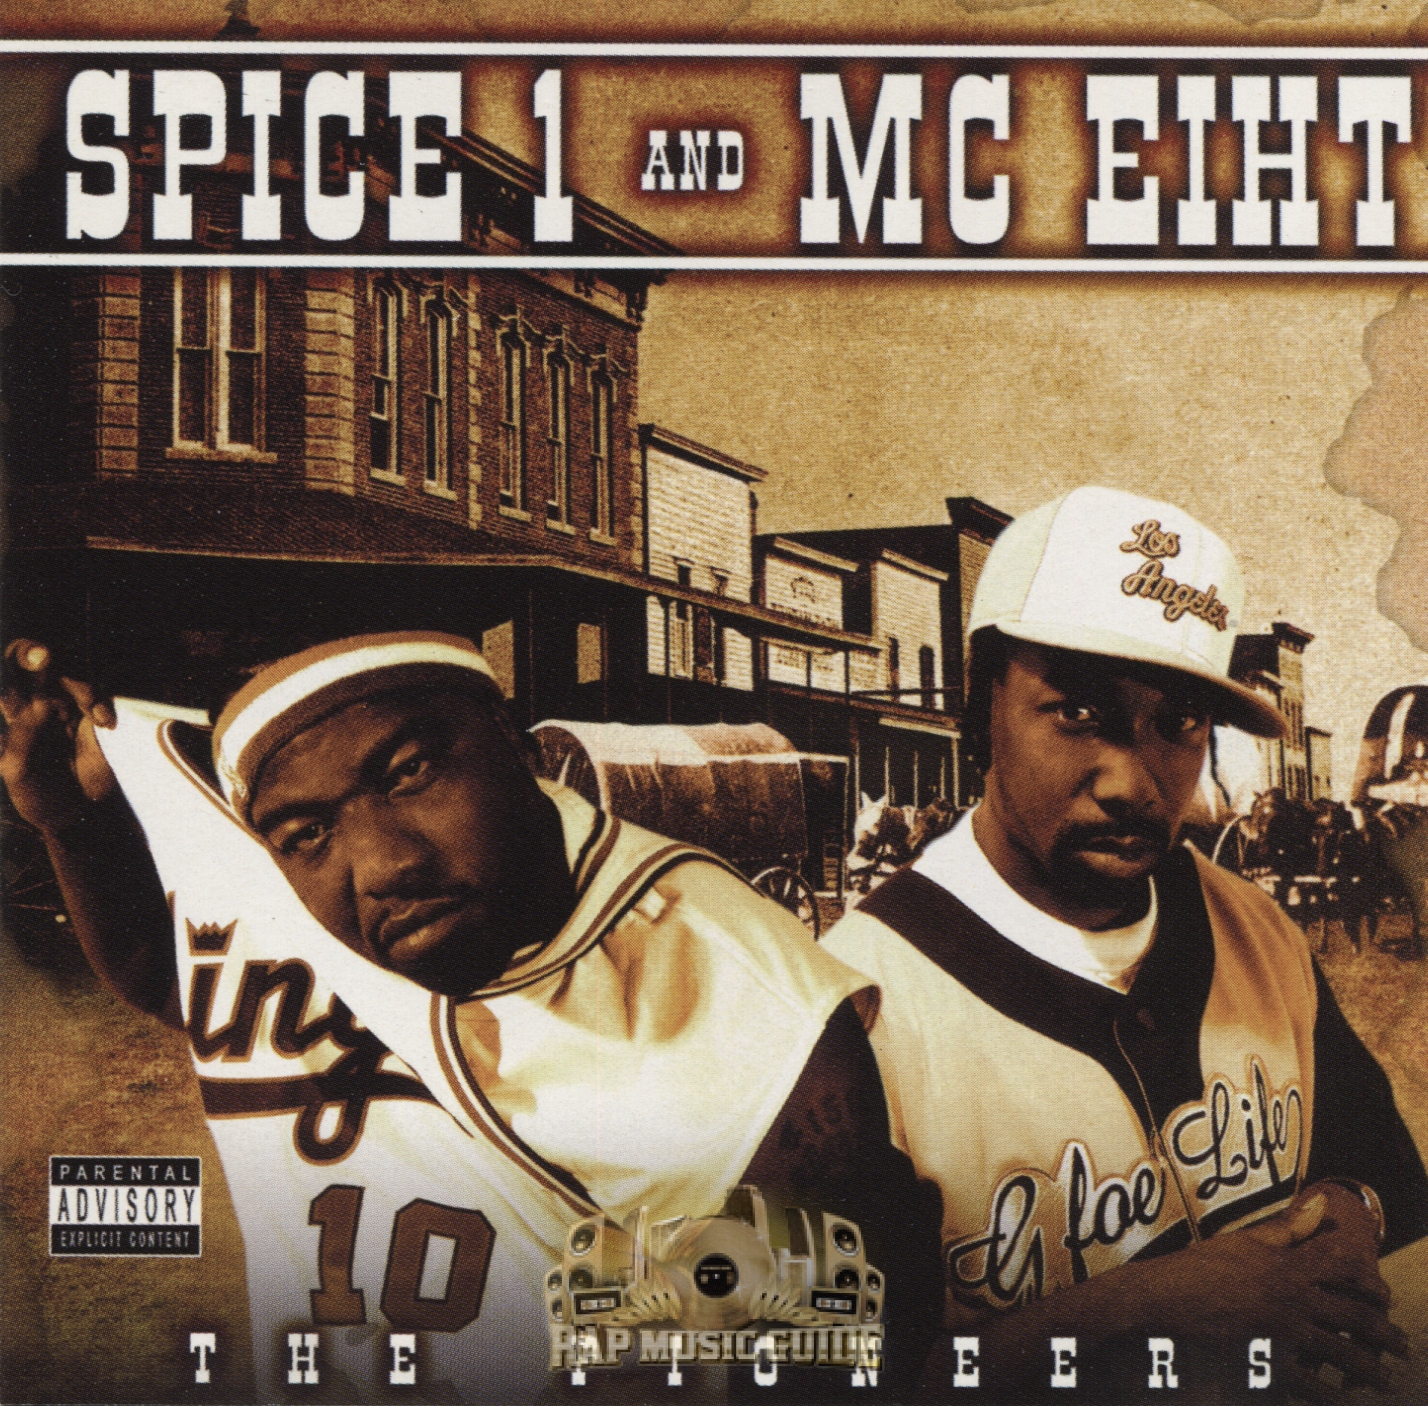 Spice 1 & MC Eiht - The Pioneers: CD | Rap Music Guide